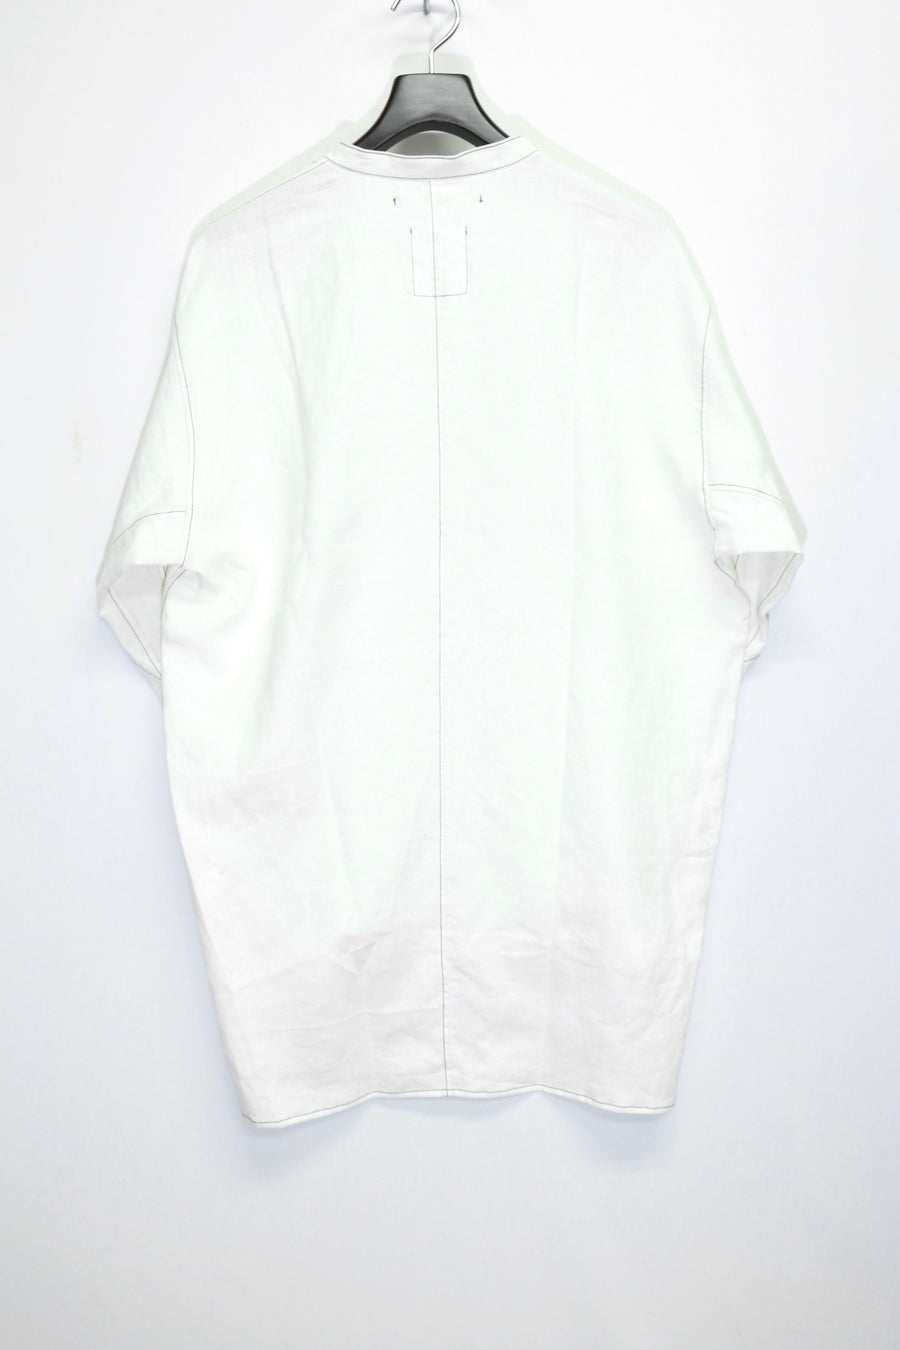 LEH  Band Top Shirt（WHITE）